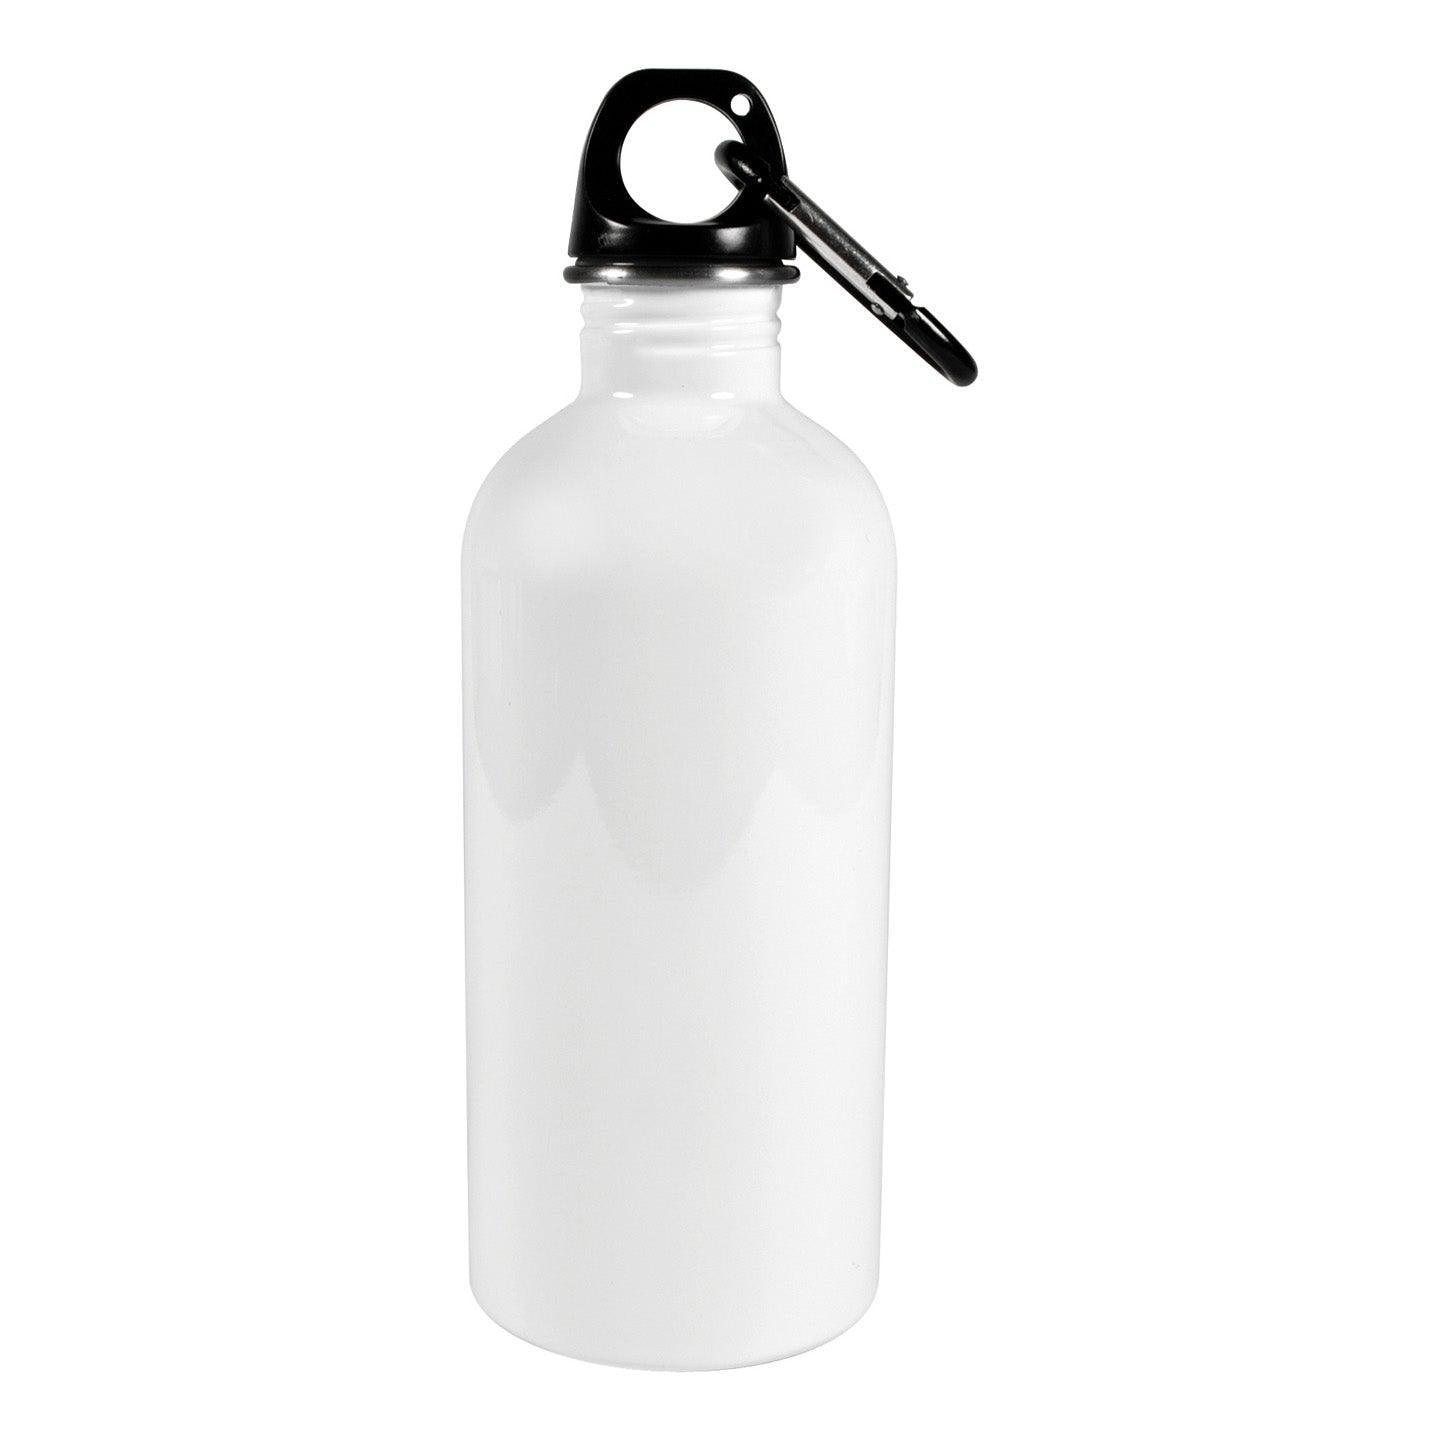 XHKDSYMC Sublimation Blanks Sport Water Bottle, 20 oz Sublimation Water Bottle Silver Water Bottles 600 ml Portable Water Bottles for Sublimation